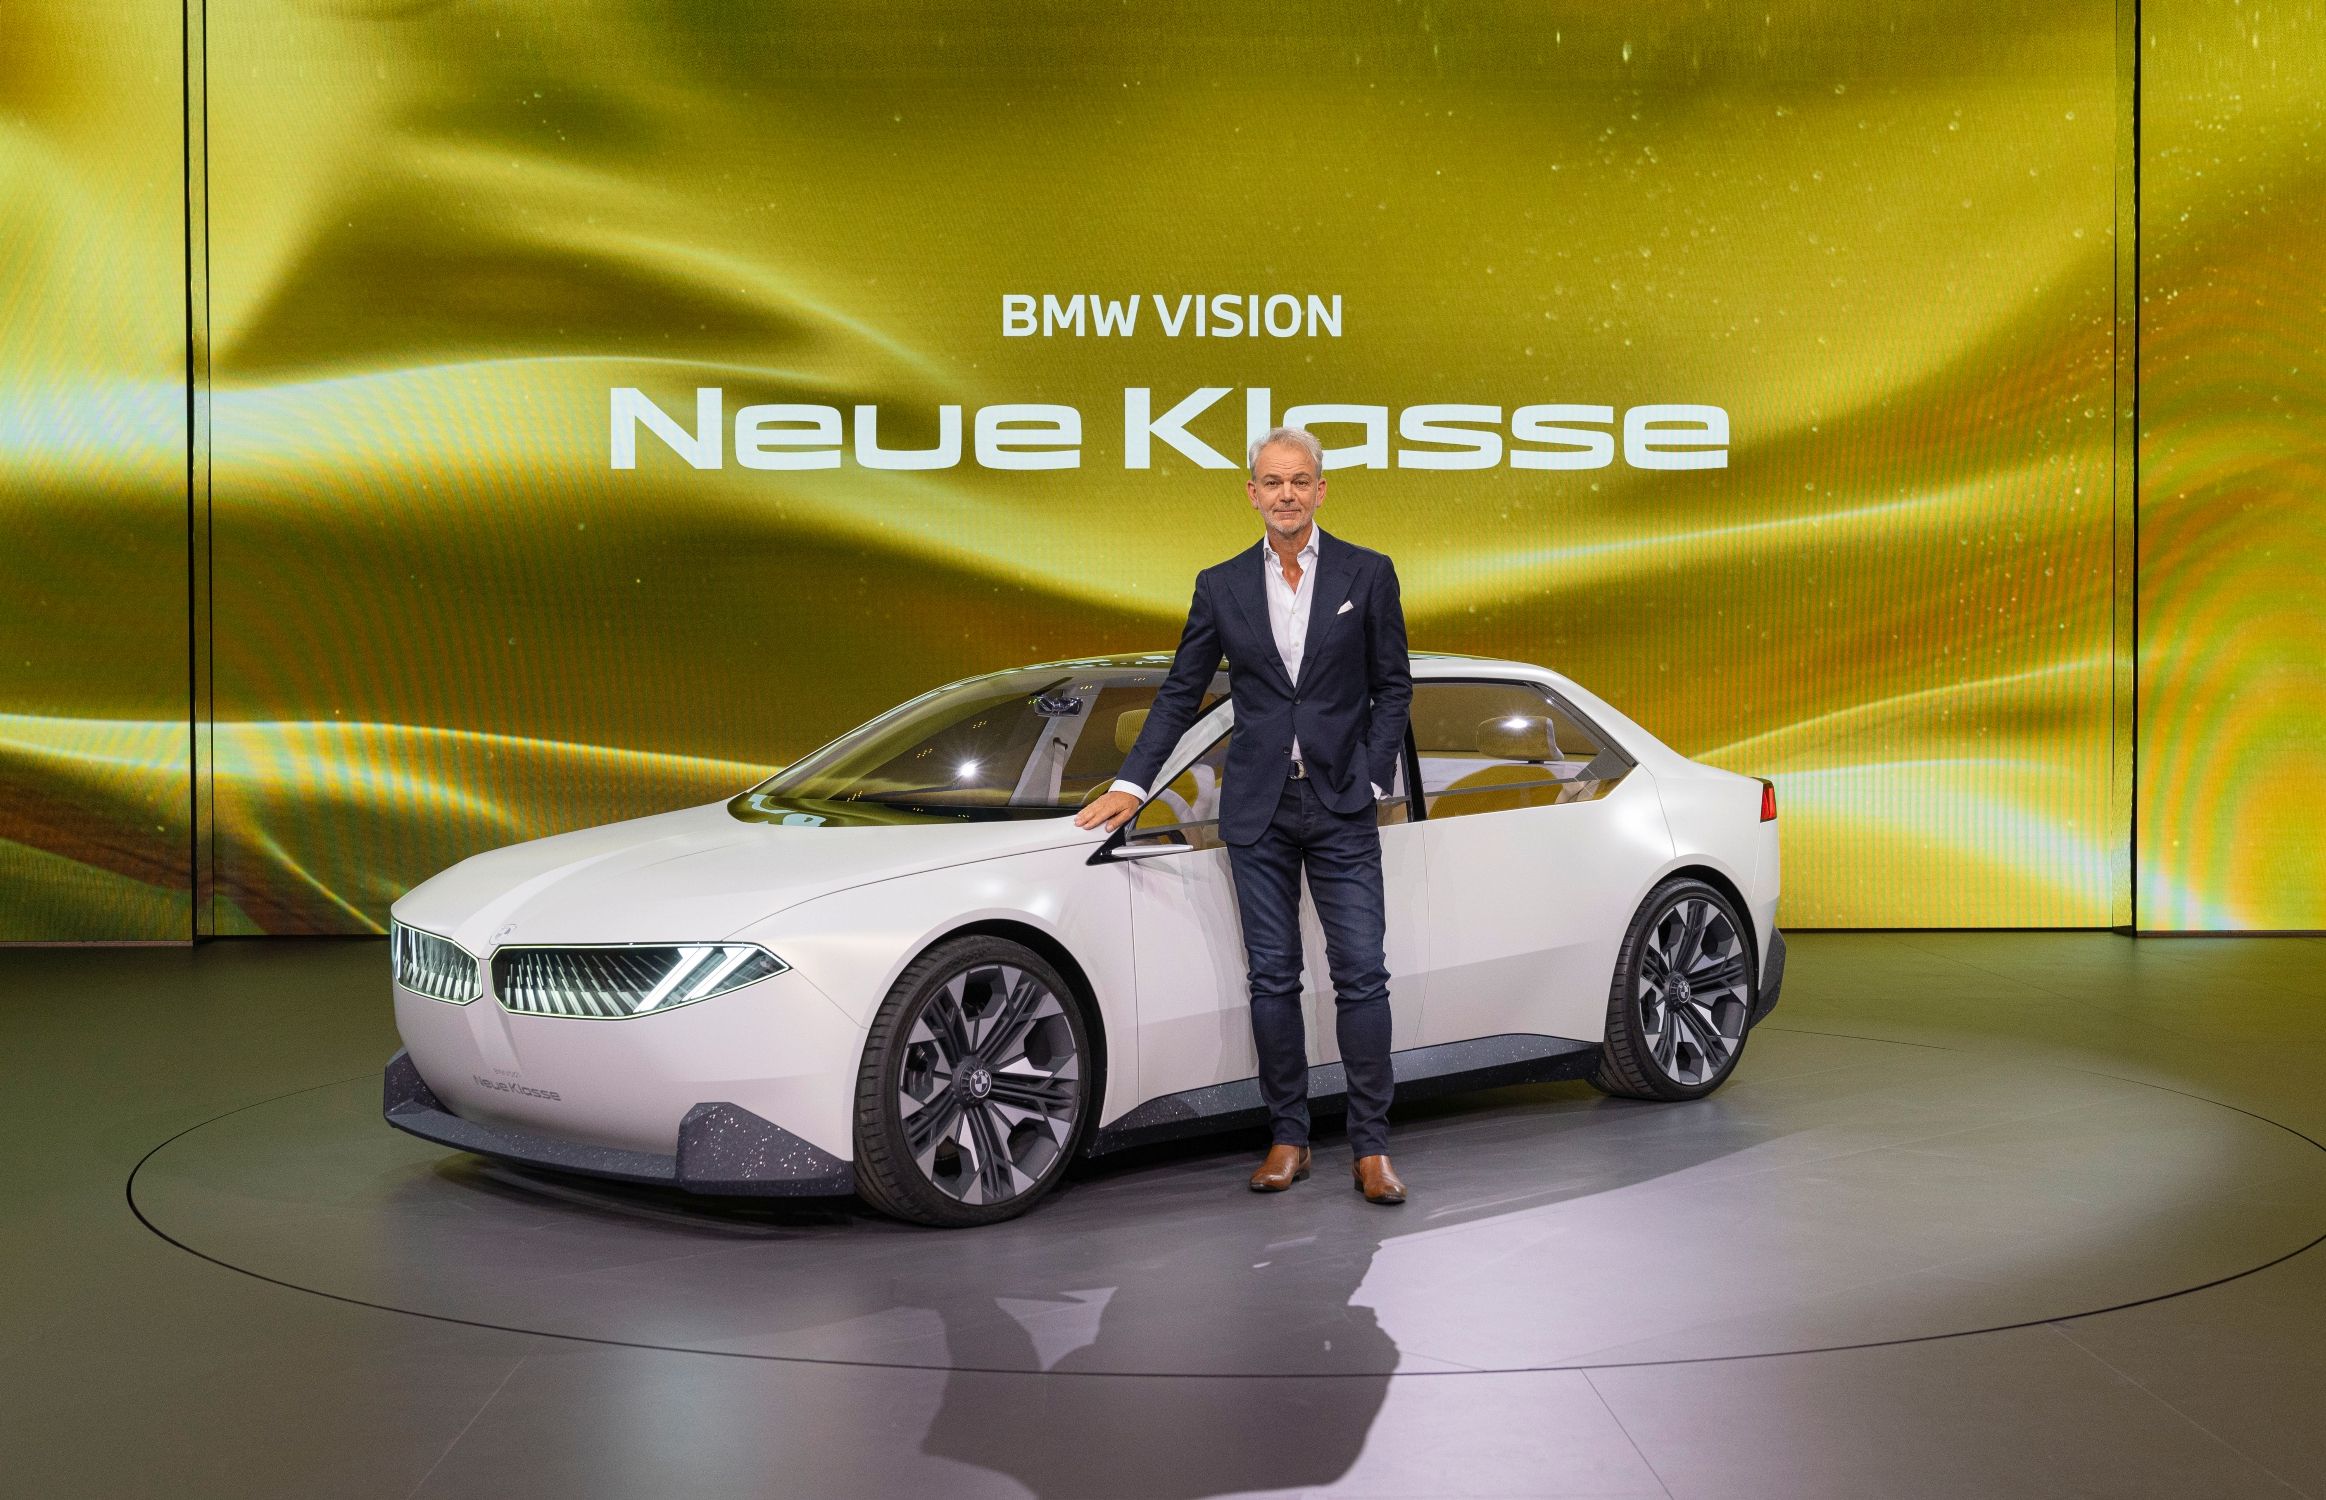 BMW-Vision-Neue-Klasse-concept-16